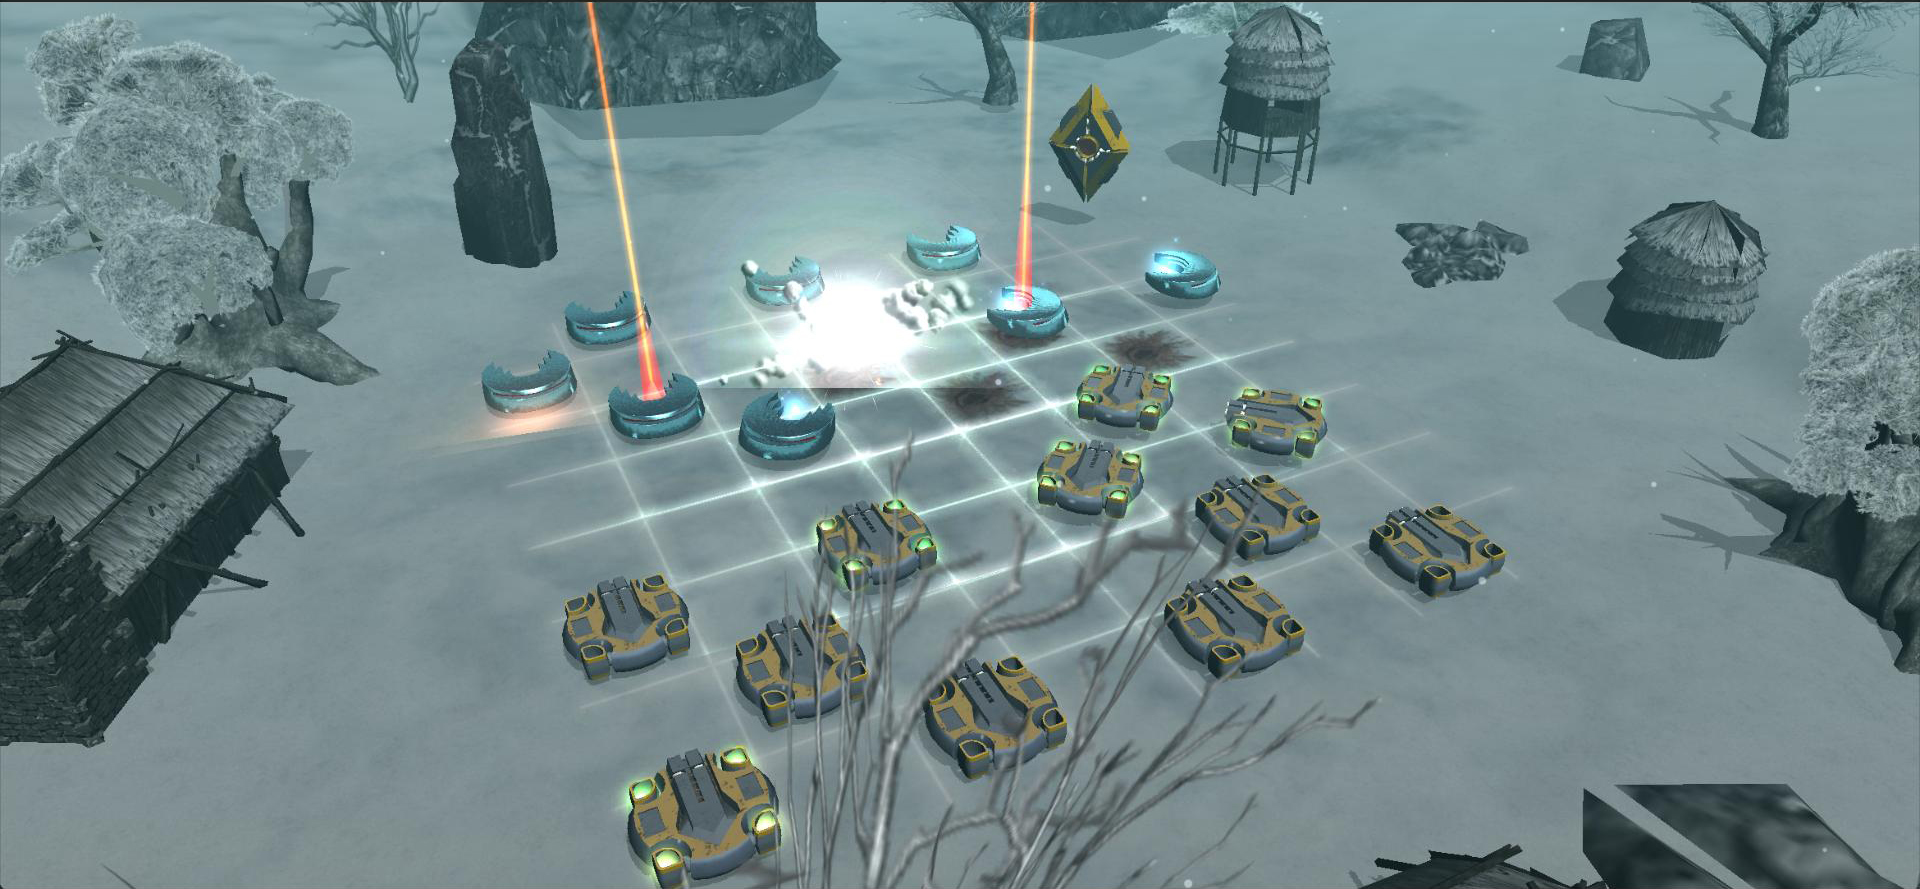 Скачать Battle Checkers: Infinity War: Android Шашки игра на телефон и планшет.